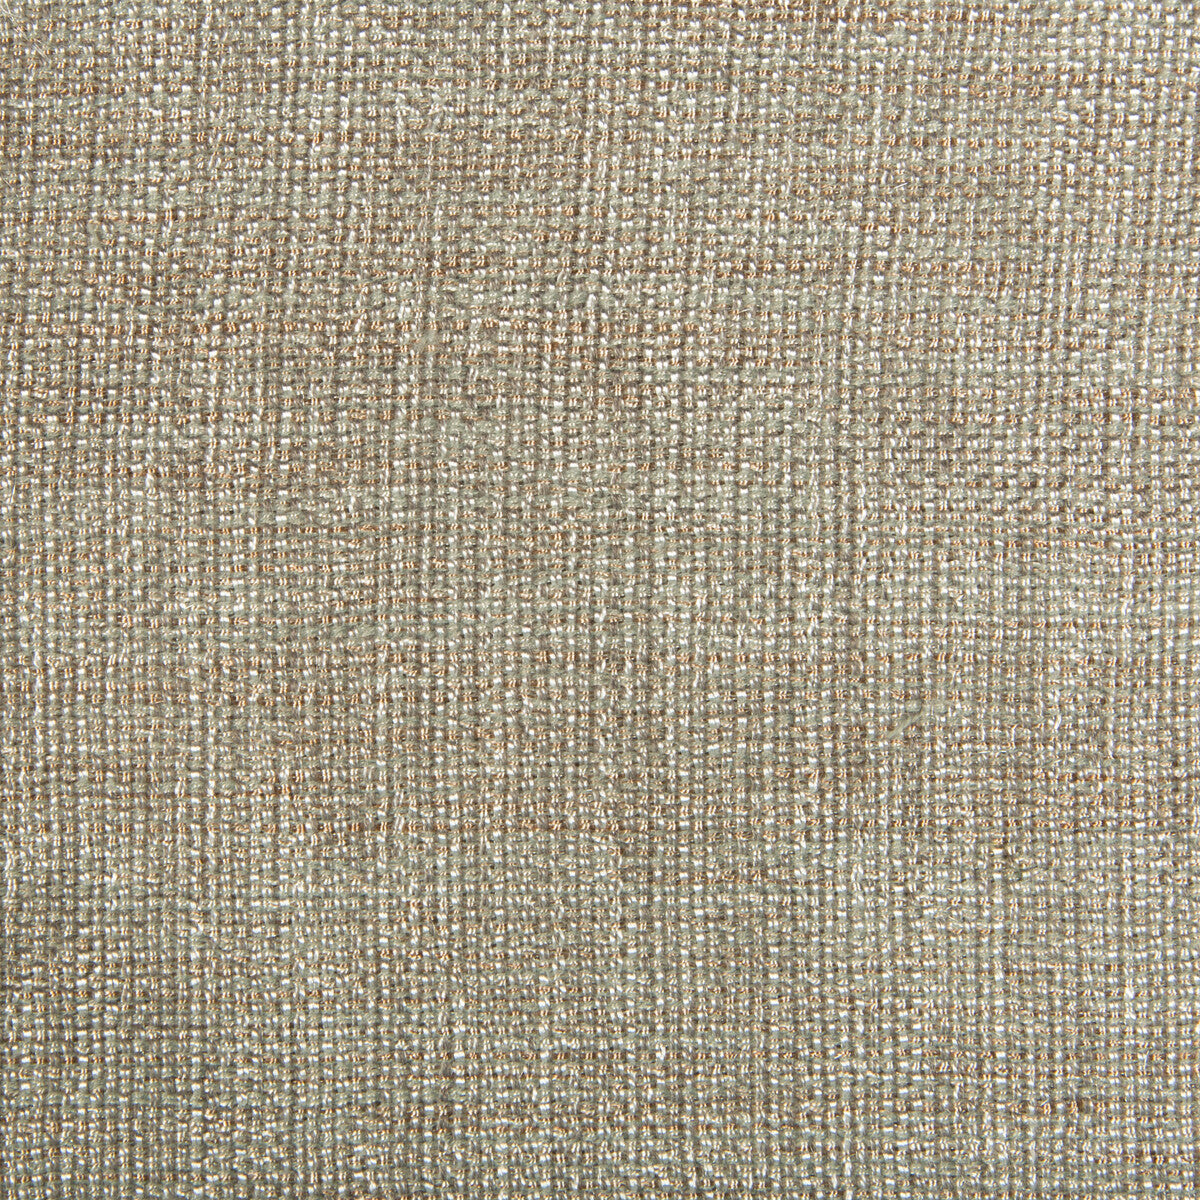 Kravet Smart fabric in 34939-1101 color - pattern 34939.1101.0 - by Kravet Smart